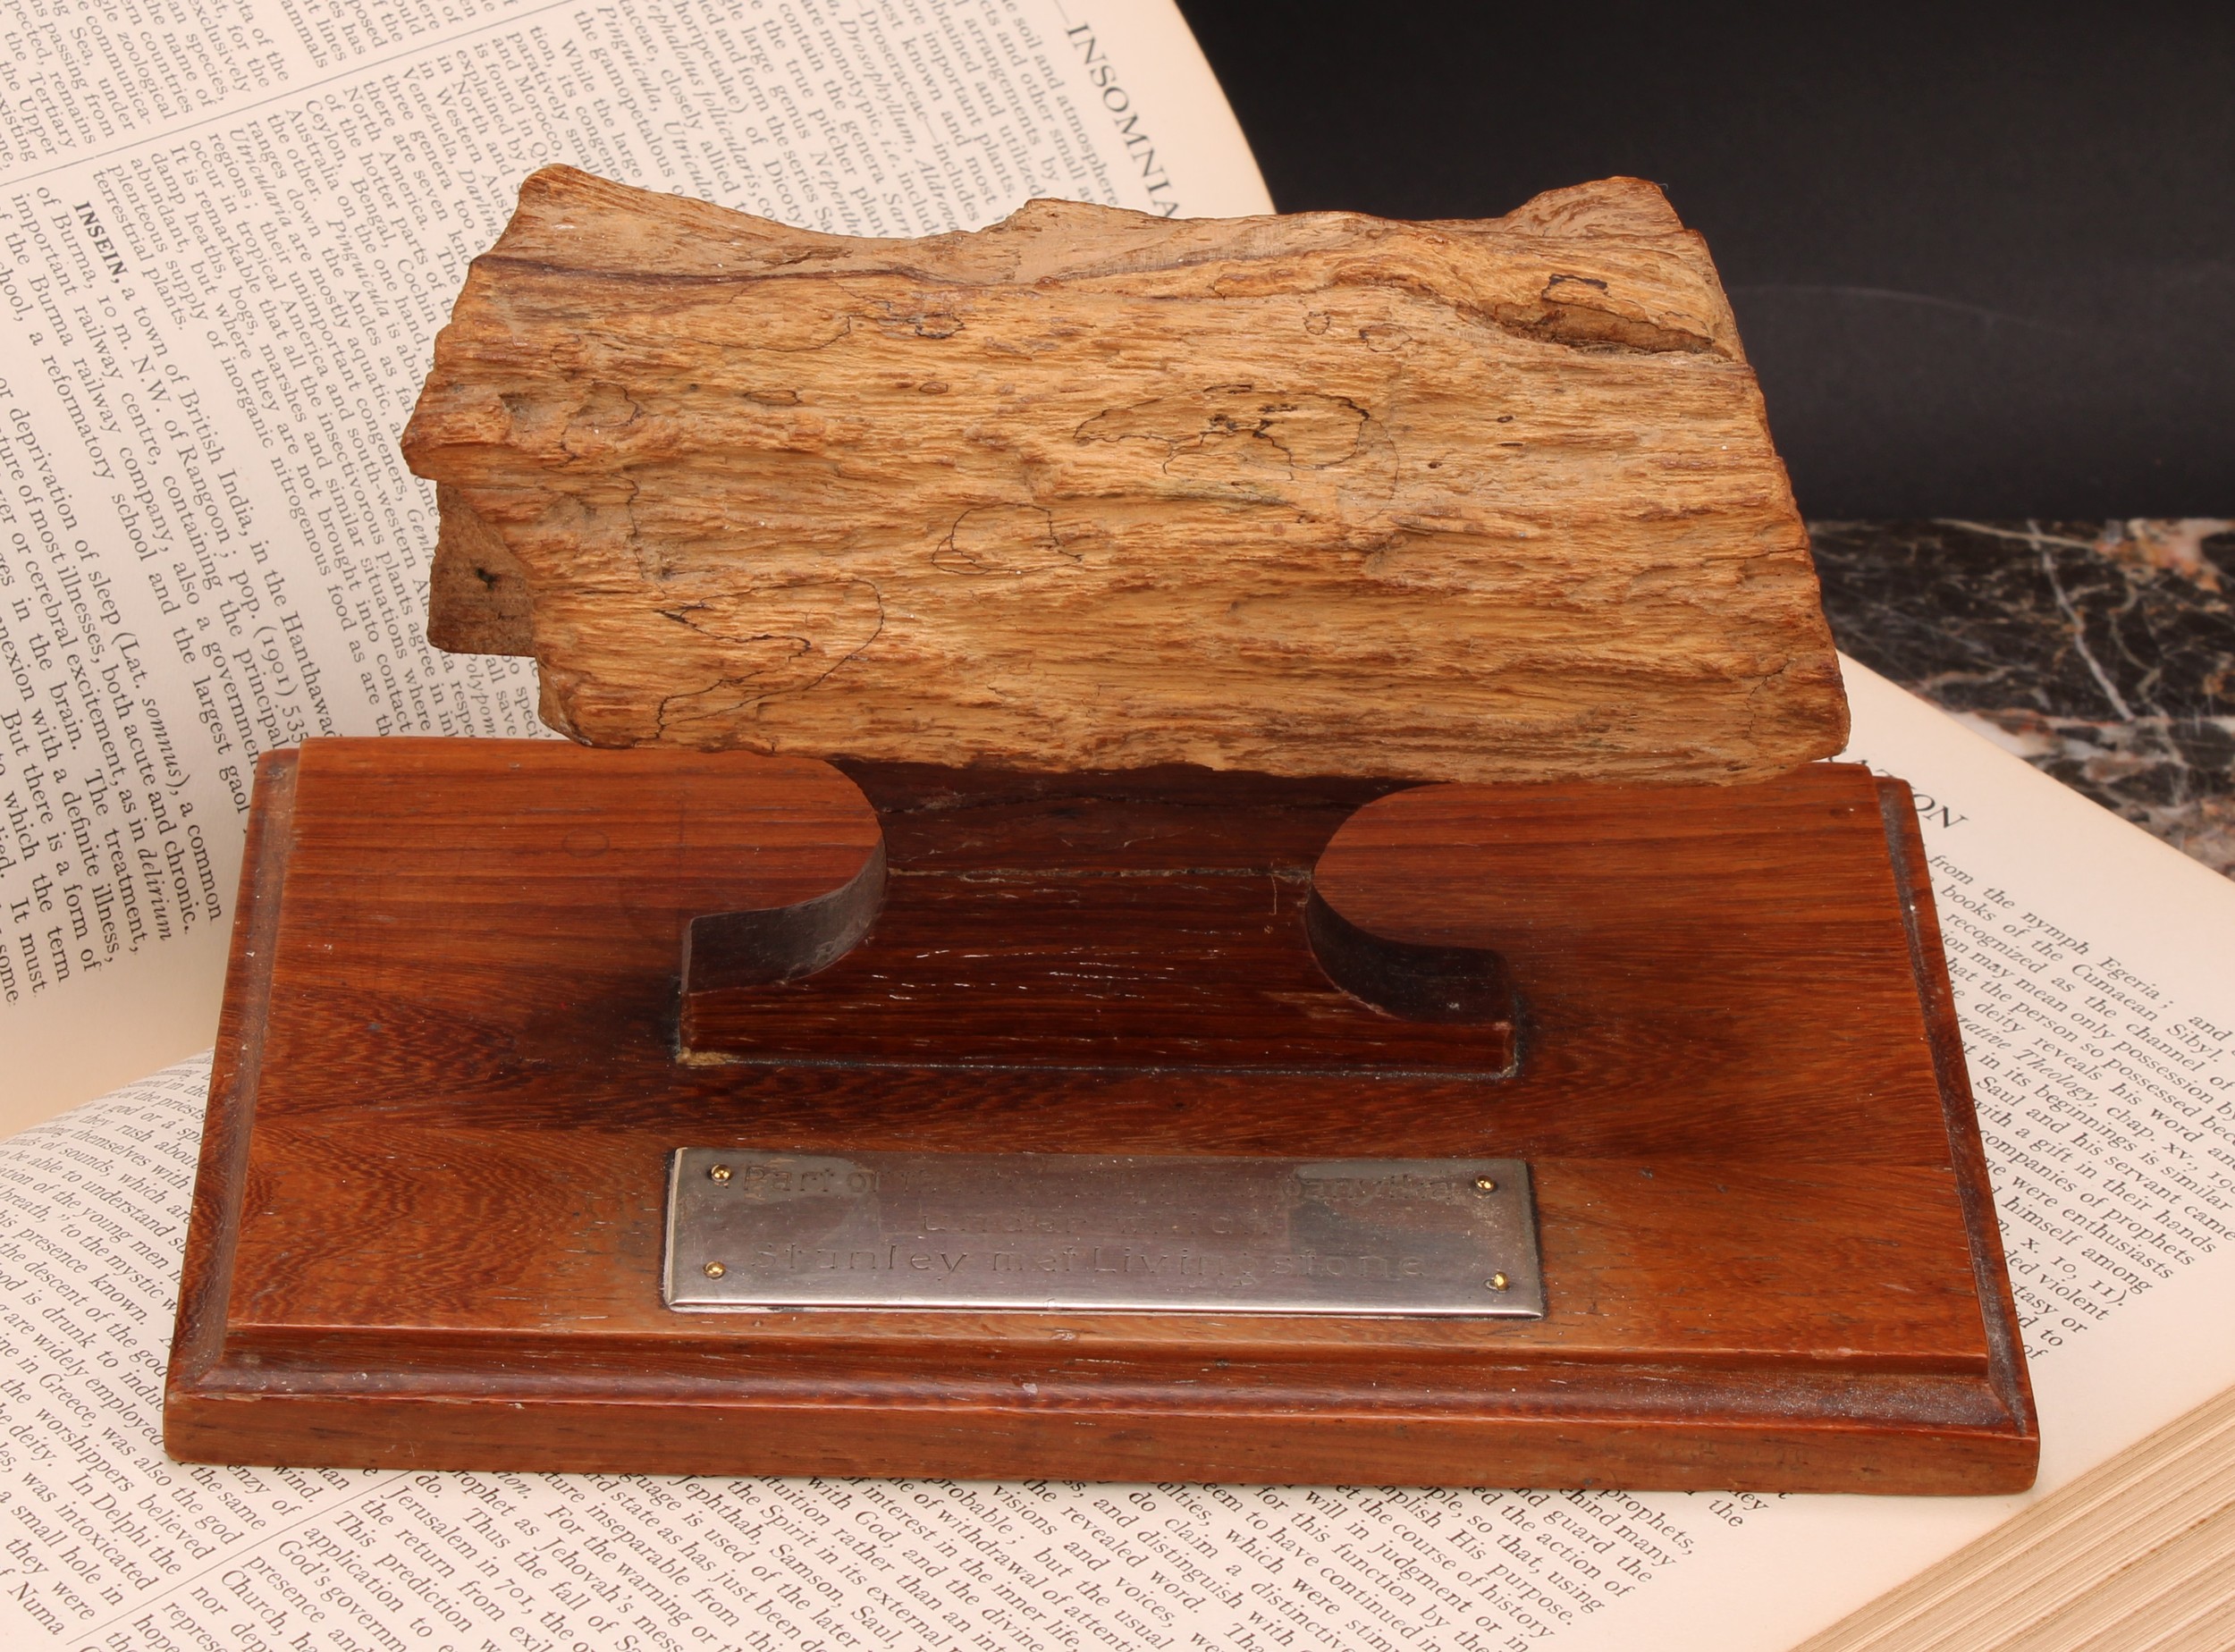 Exploration - Africa - Henry Morton Stanley and David Livingston - an African timber specimen,